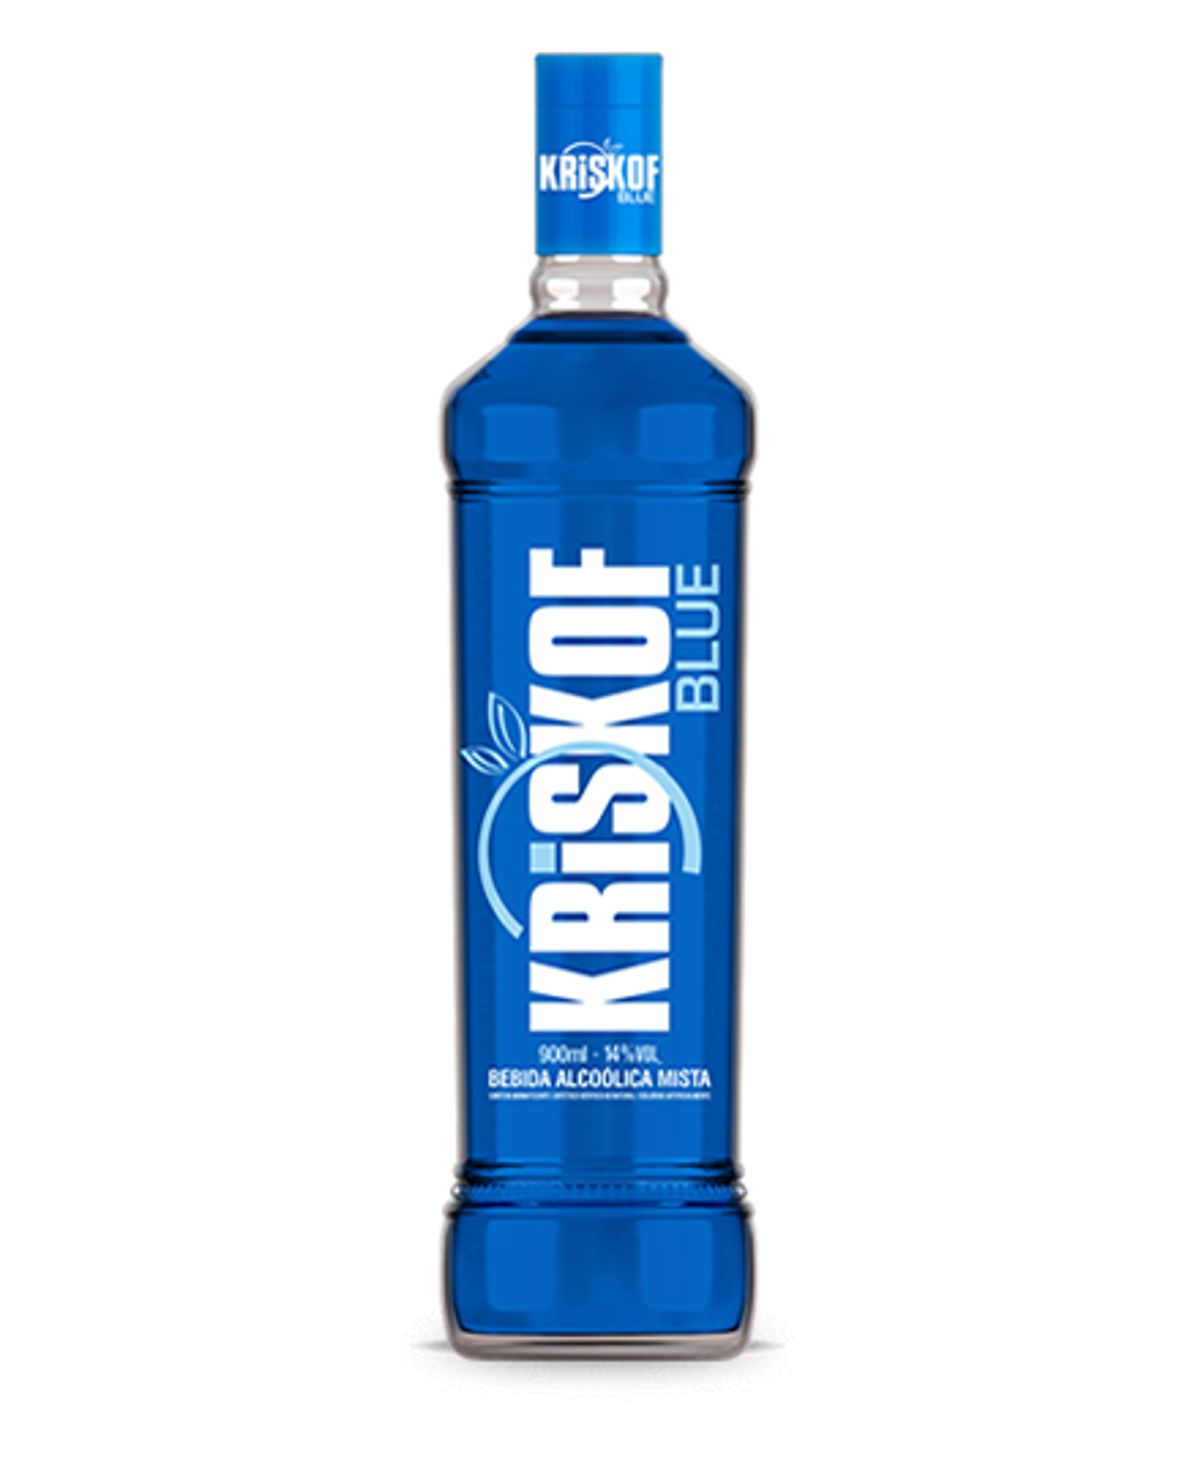 Bebida Alcoólica Mista Kriskof Blue 900ml